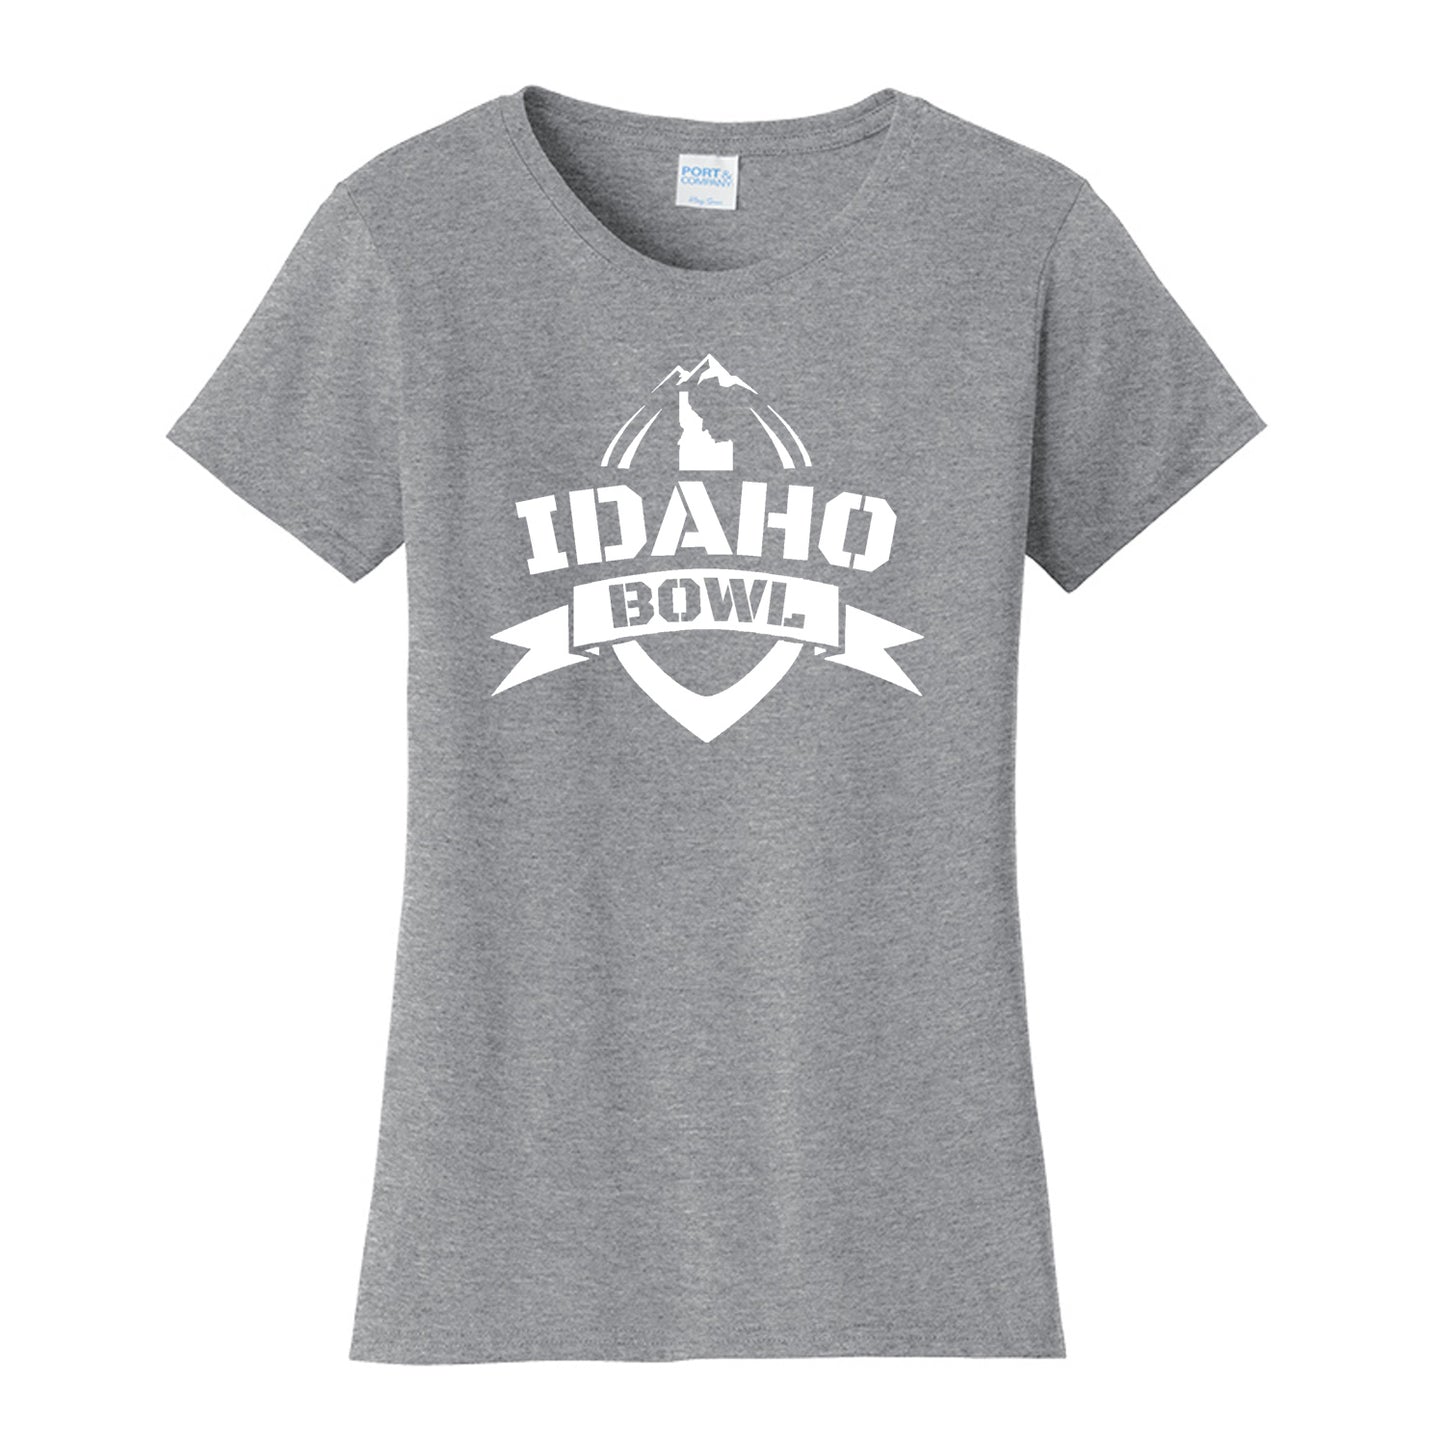 Idaho Bowl - Women's Tee - 3 colors available